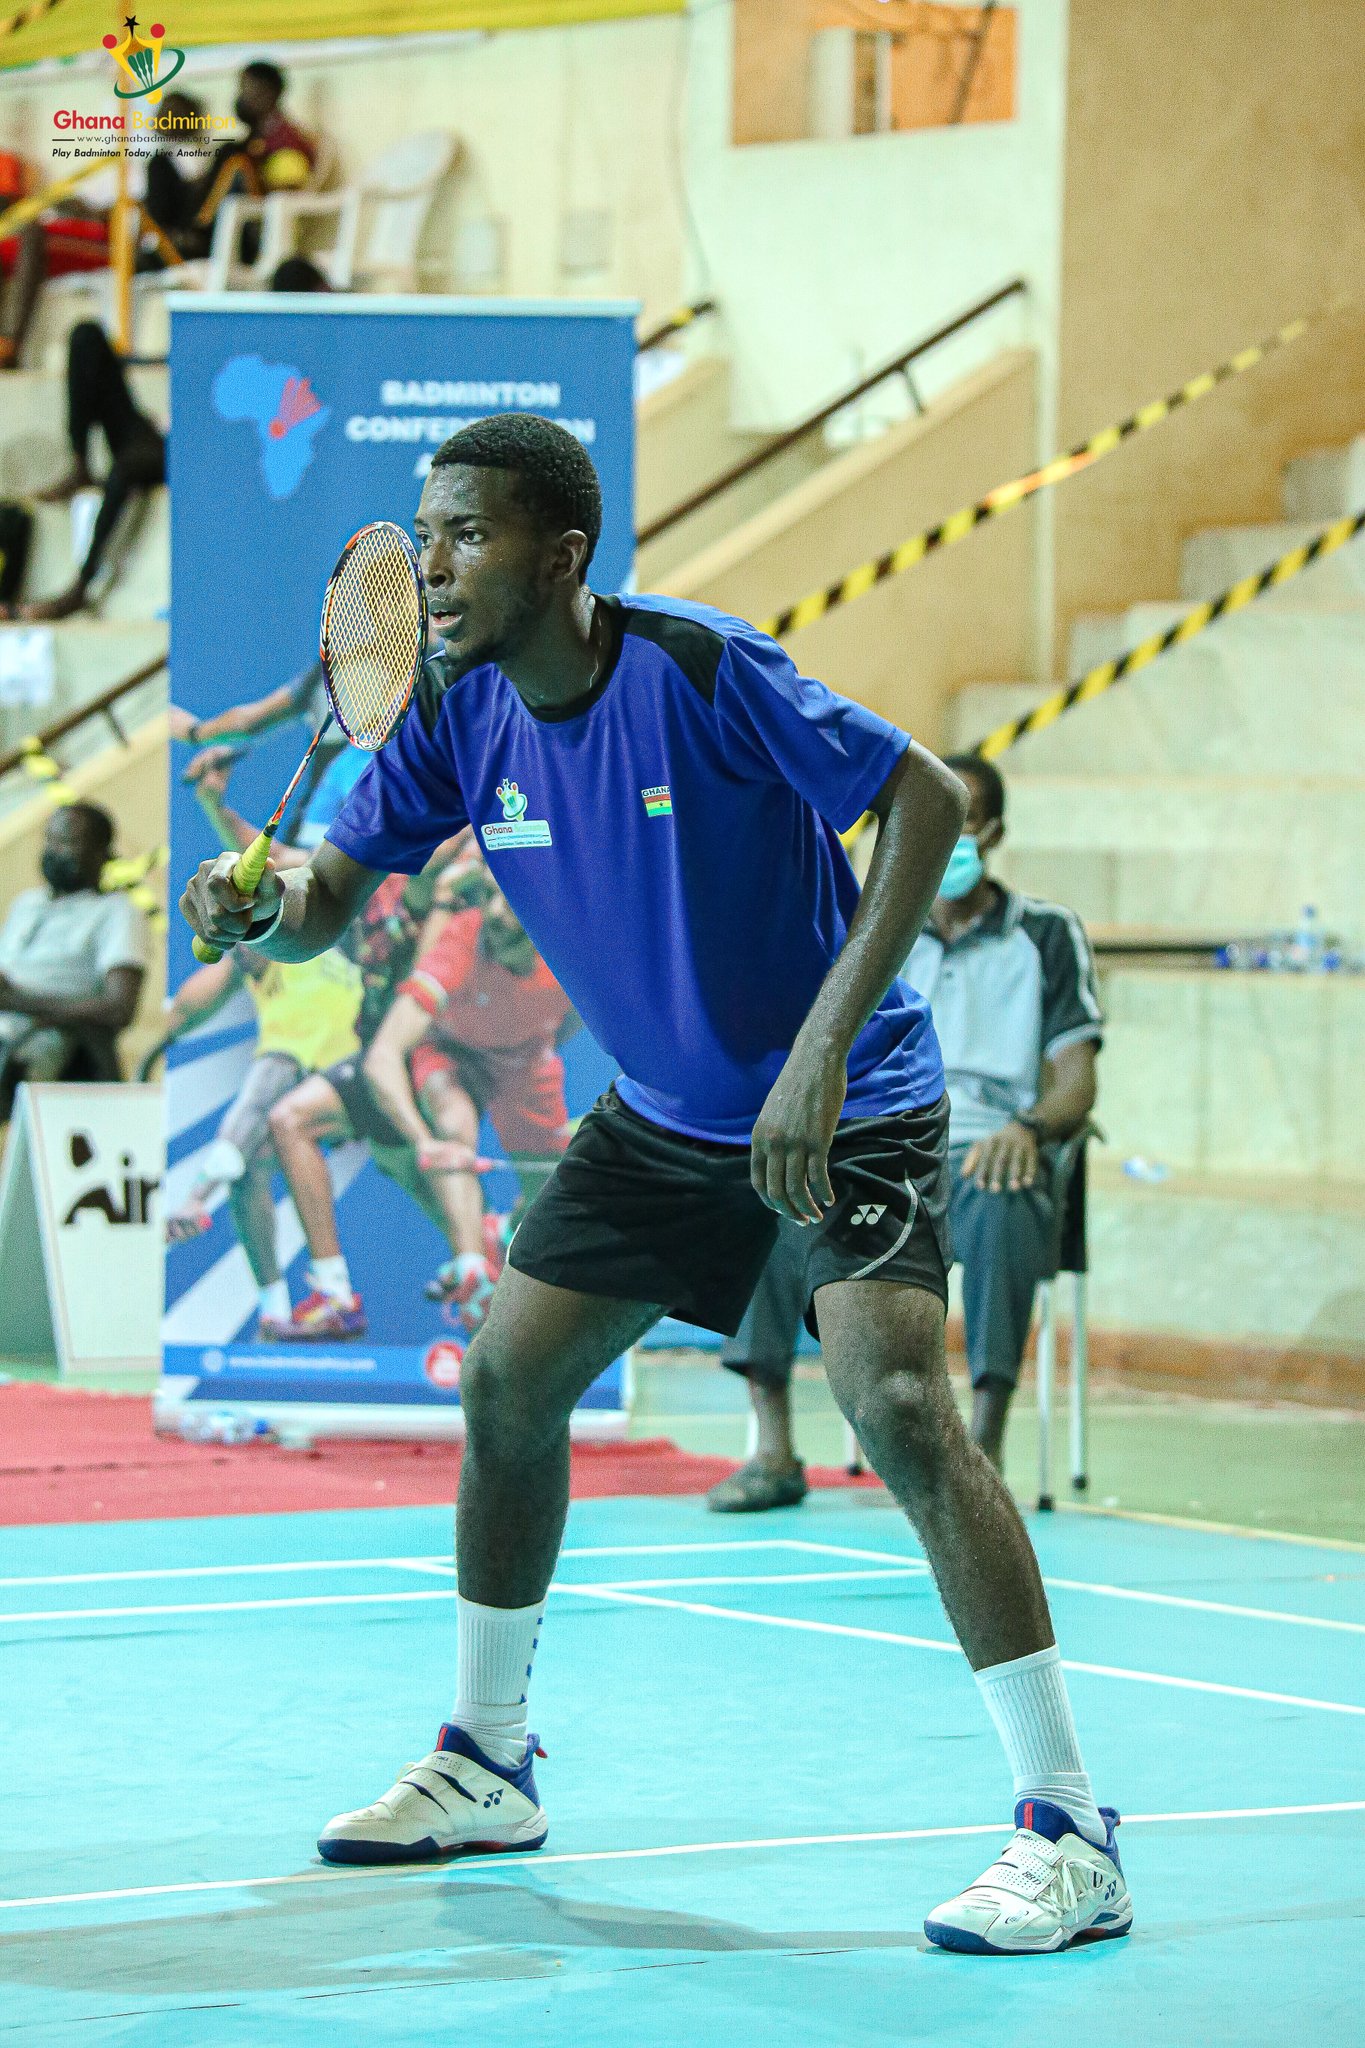 Ghana Badminton Association on Twitter